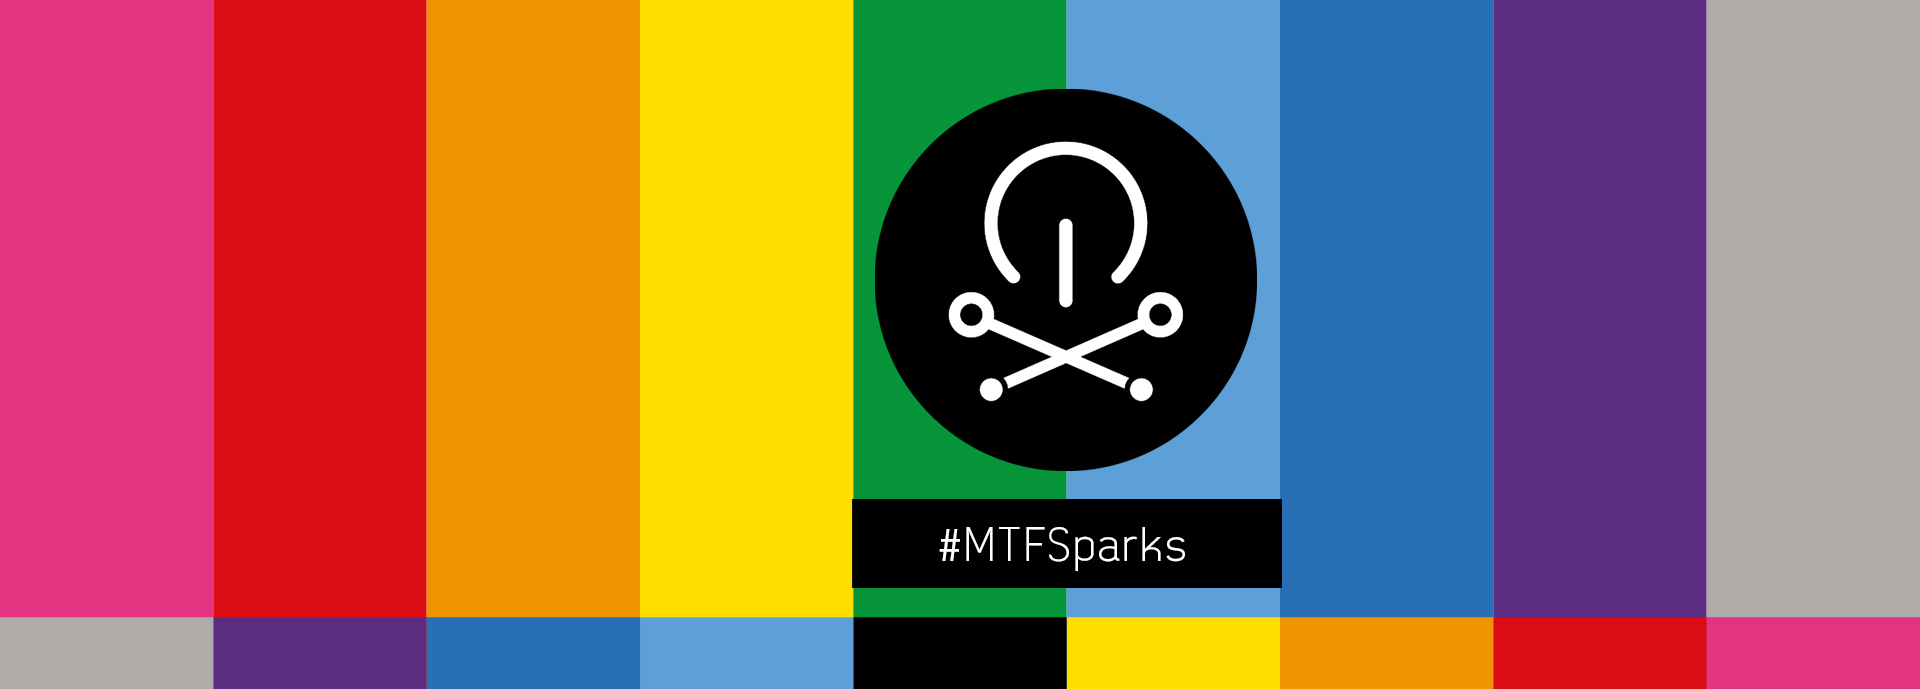 MTFSparks_header.jpg